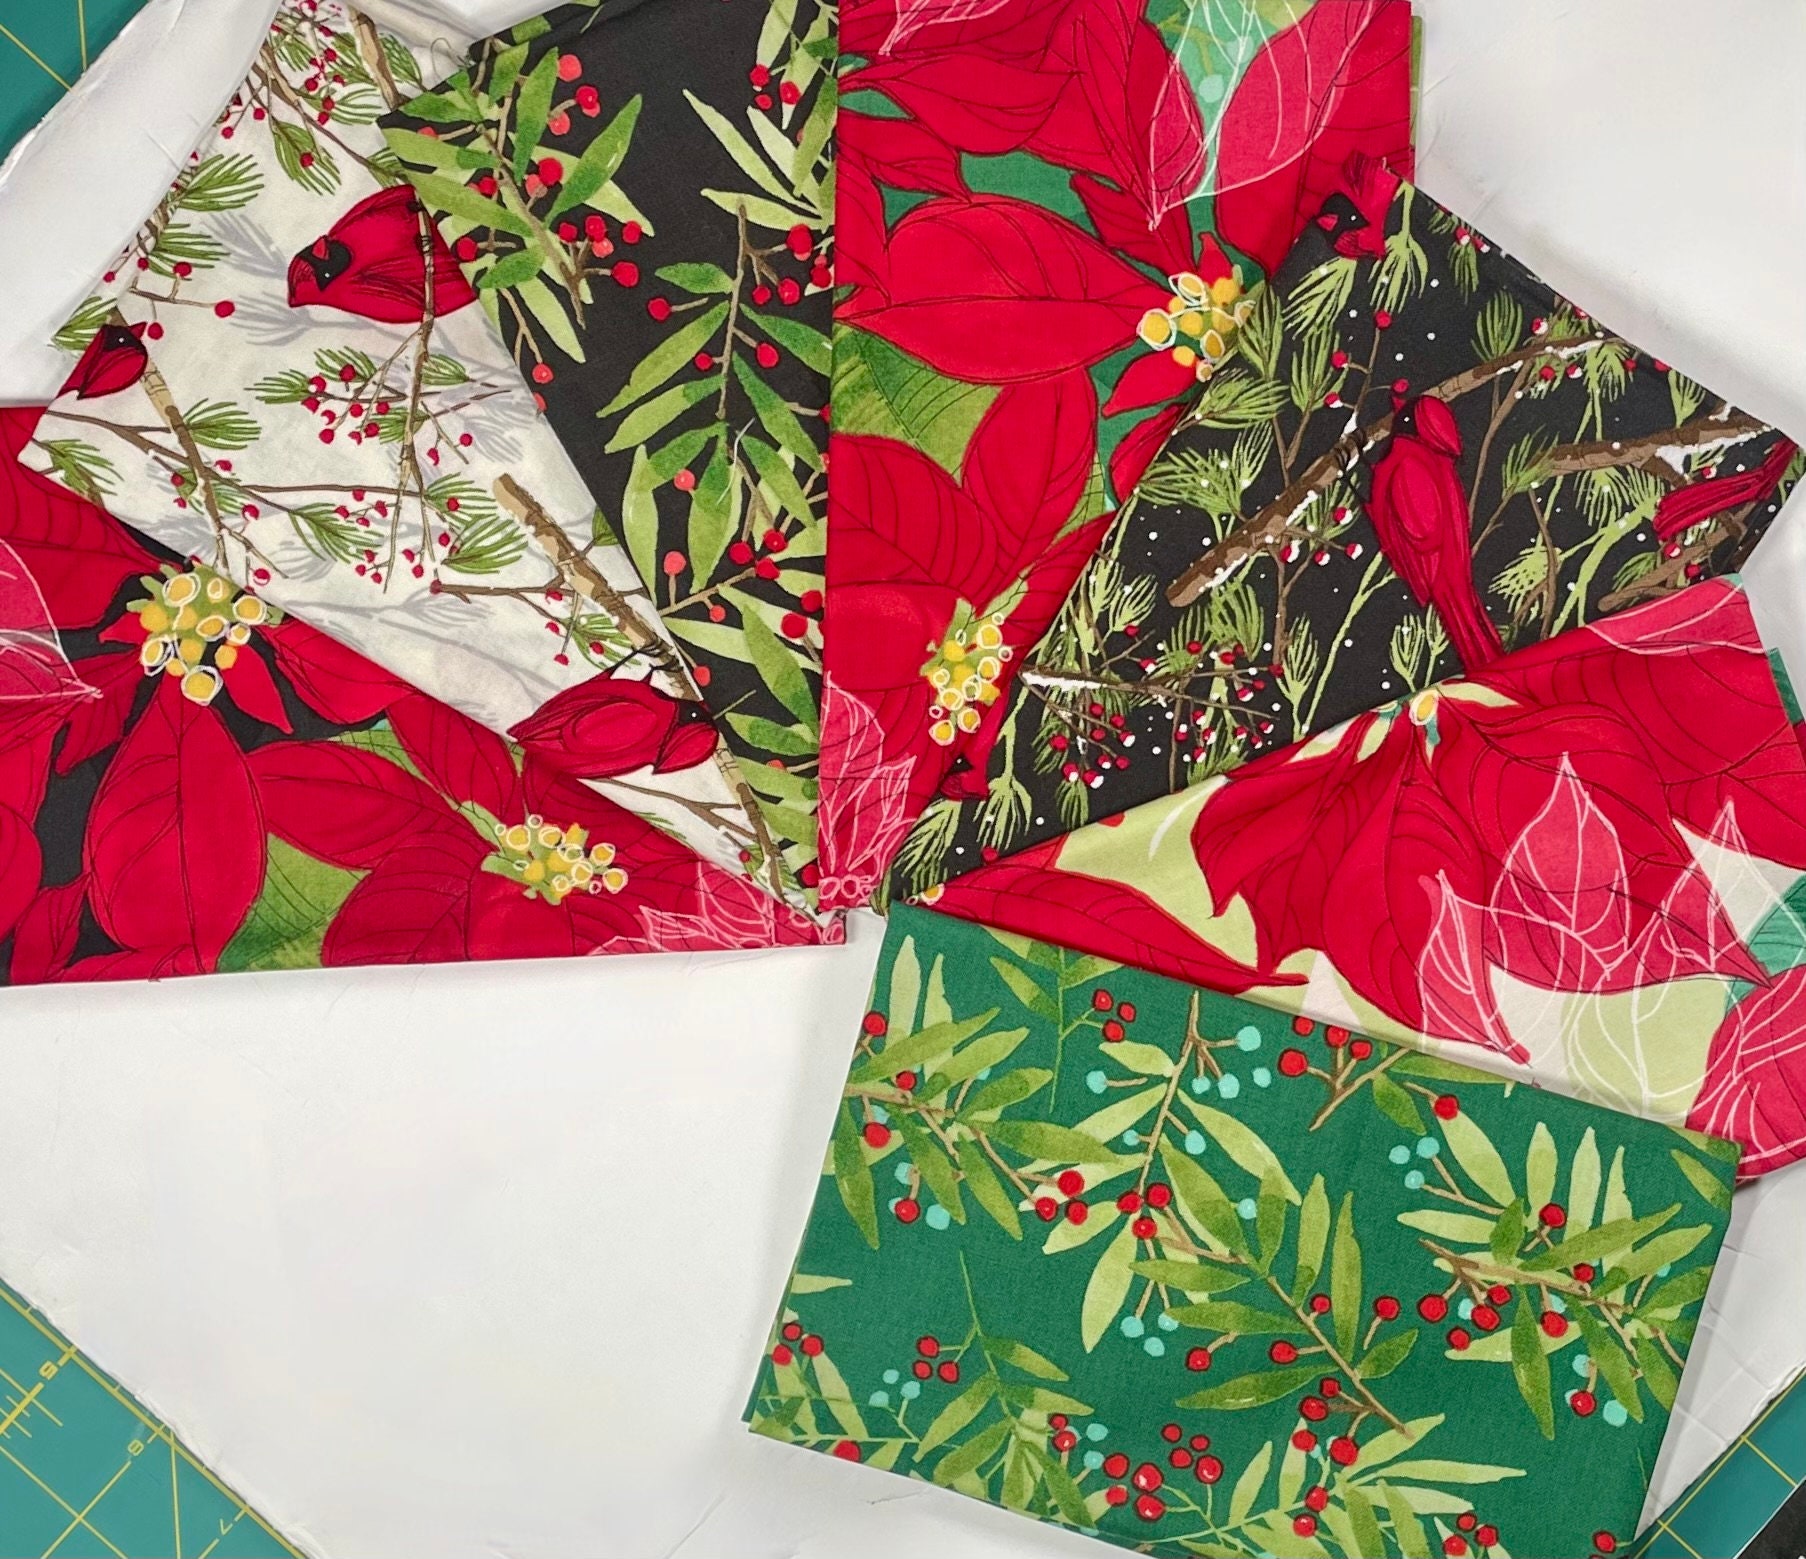 Splendid Christmas Fabrics - Robin Pickens